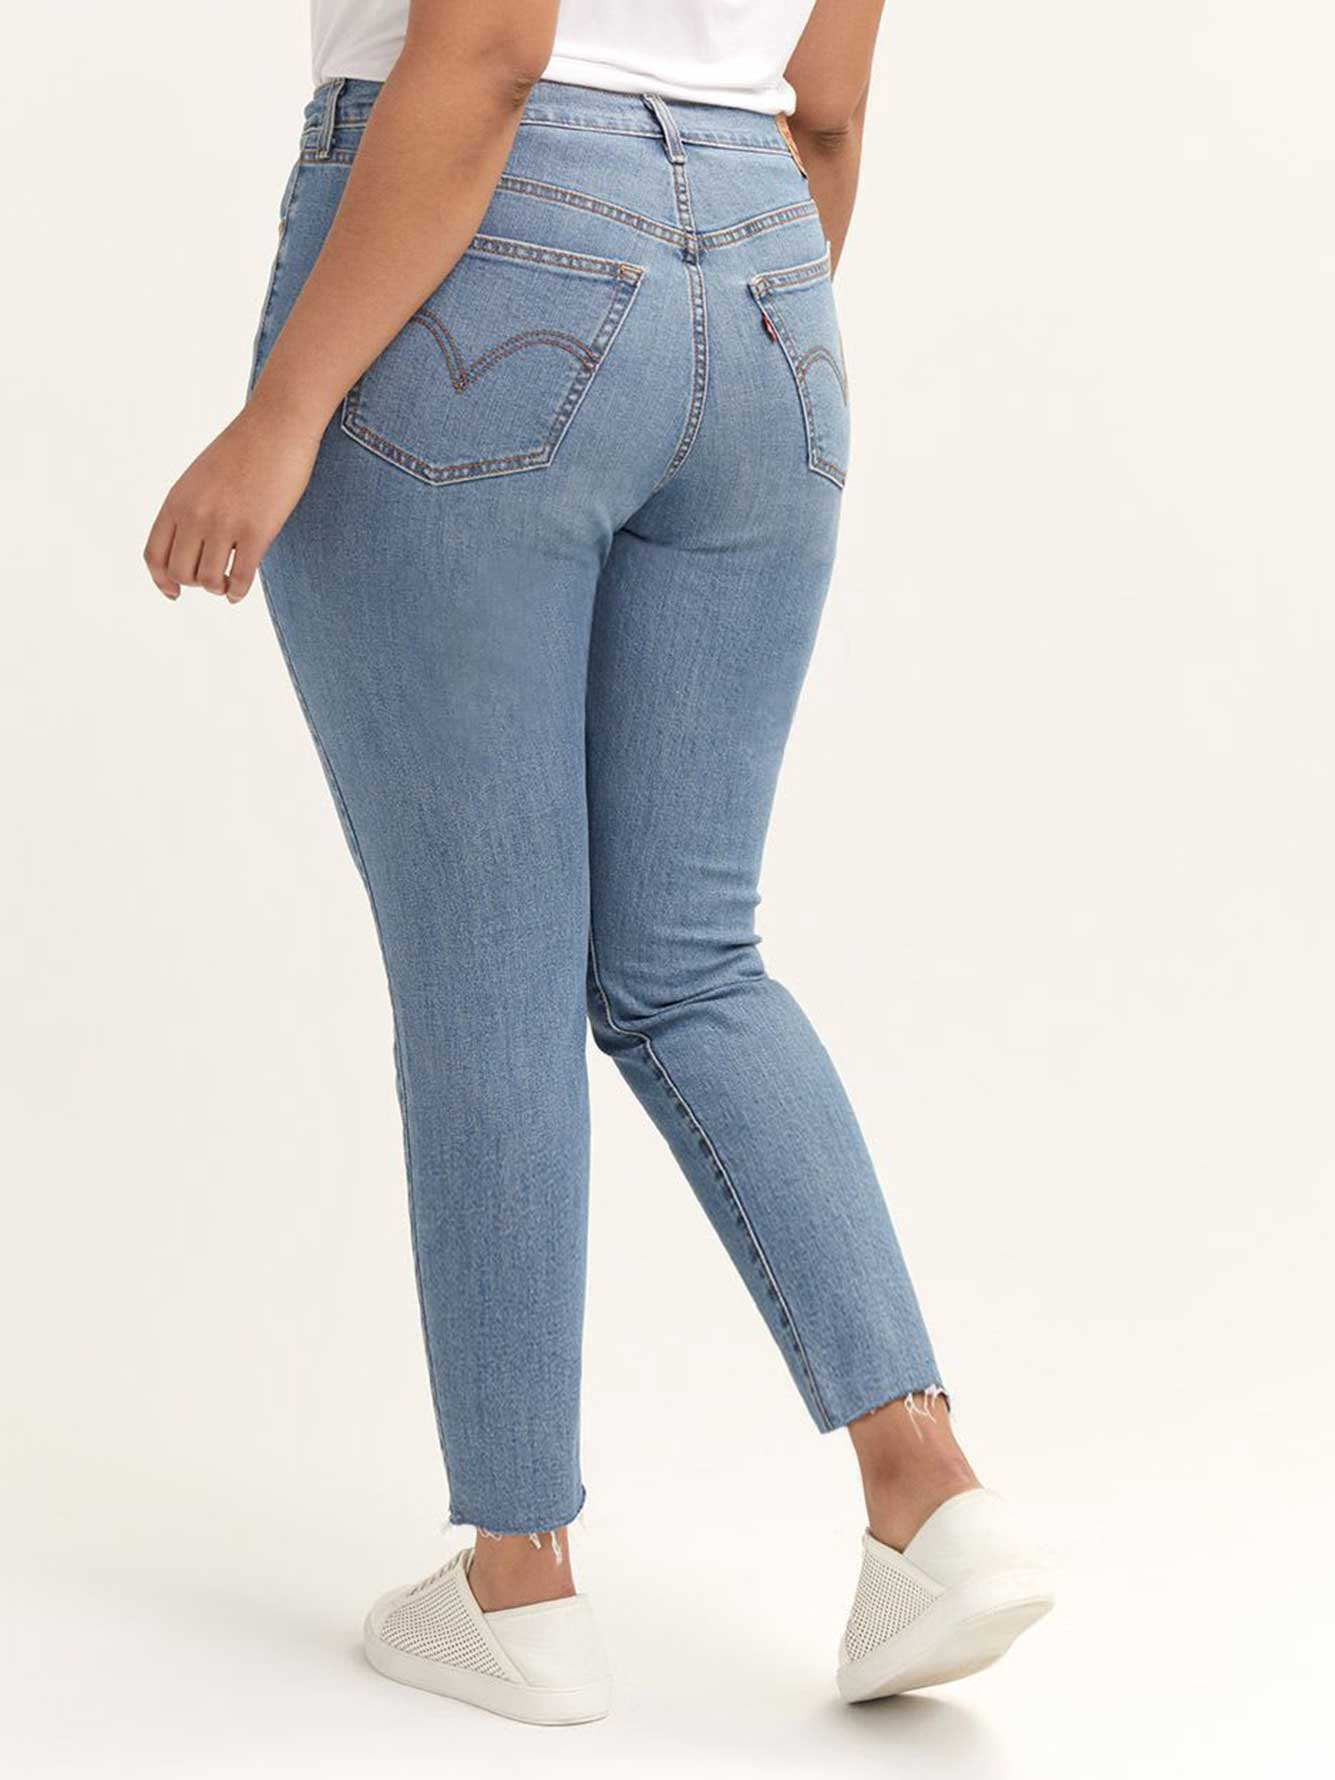 Wedgie Skinny Jeans - Levi's | Addition Elle